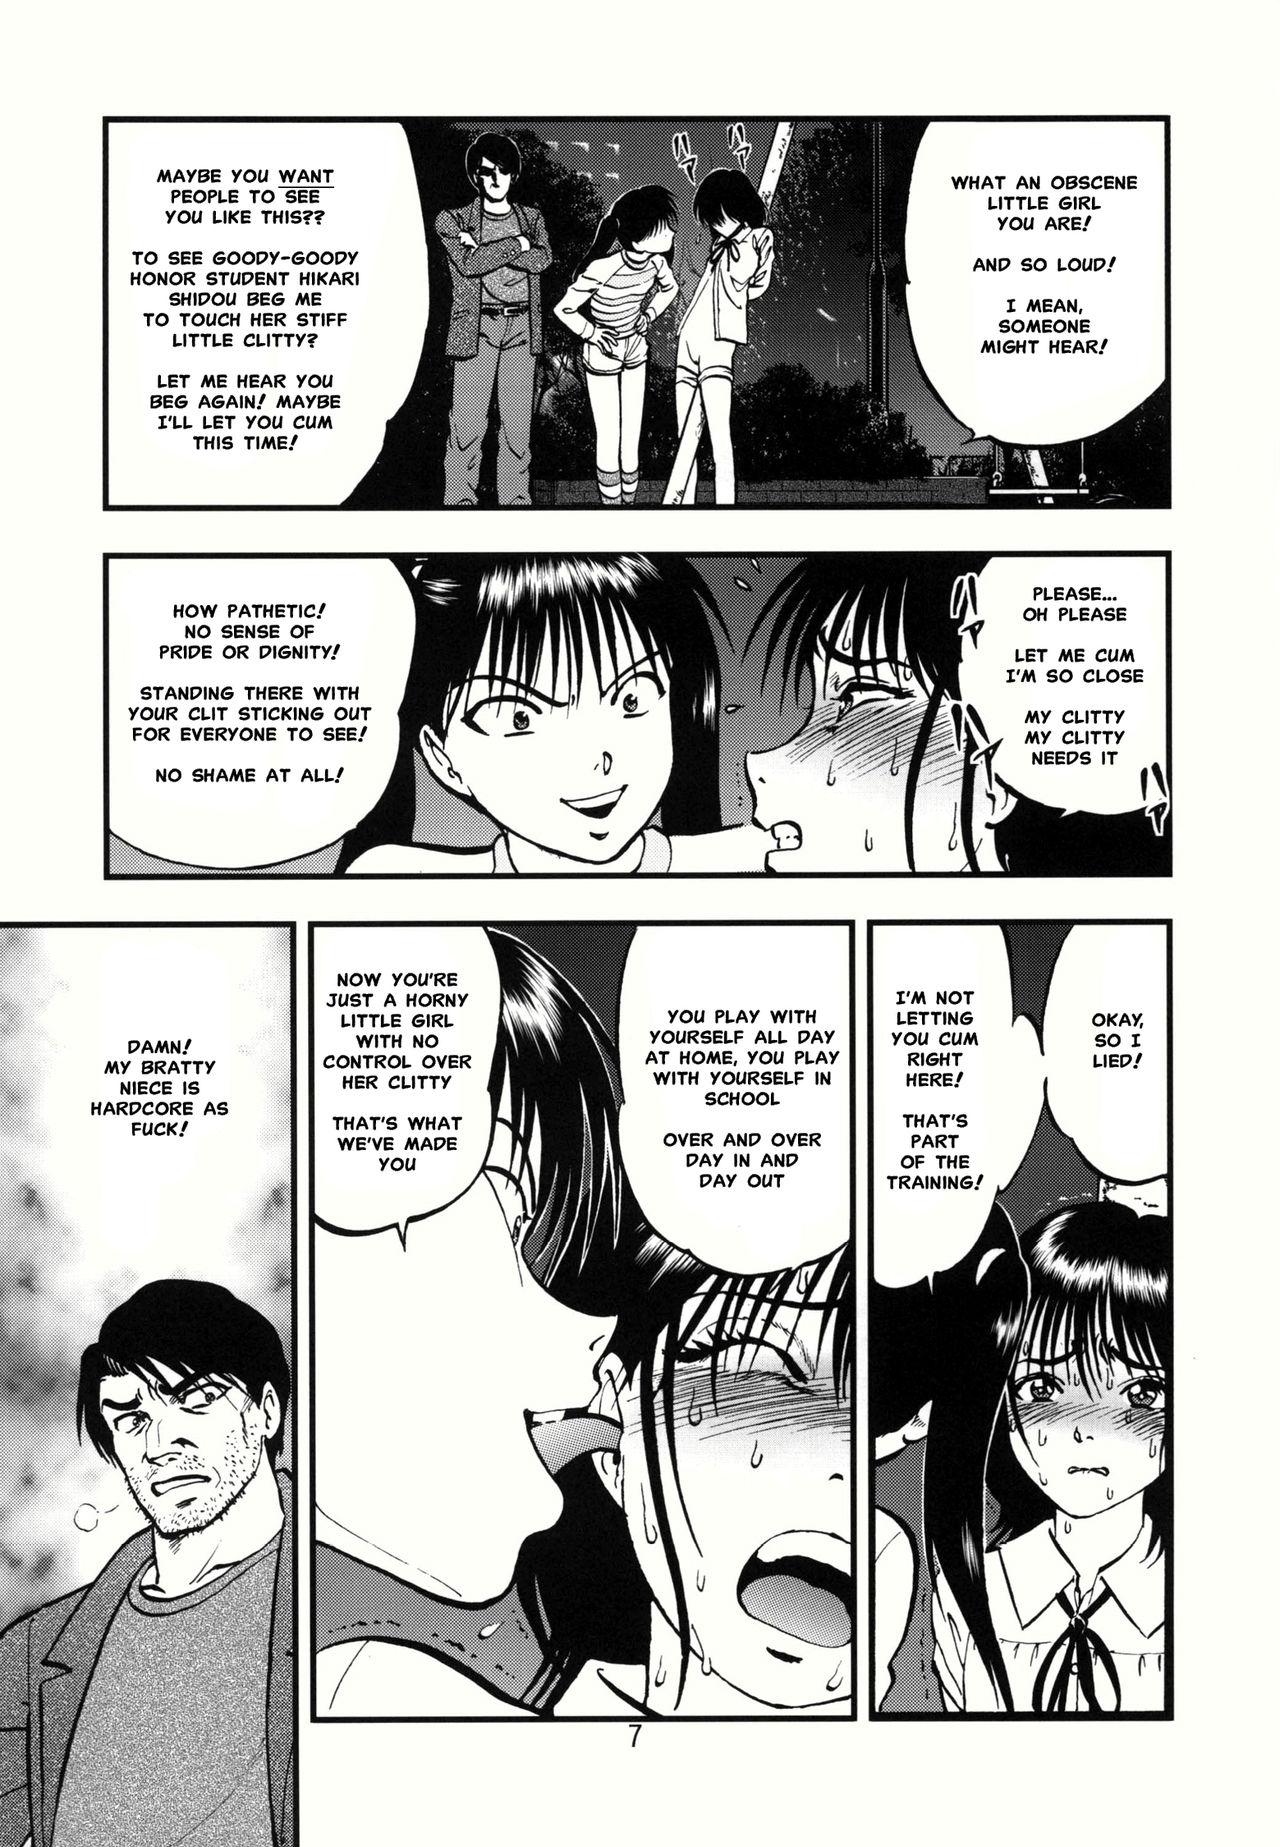 Pissing Ura Kuri Hiroi 1 | Picking Chestnuts - Eriko's Story Part 1 Anime - Page 4